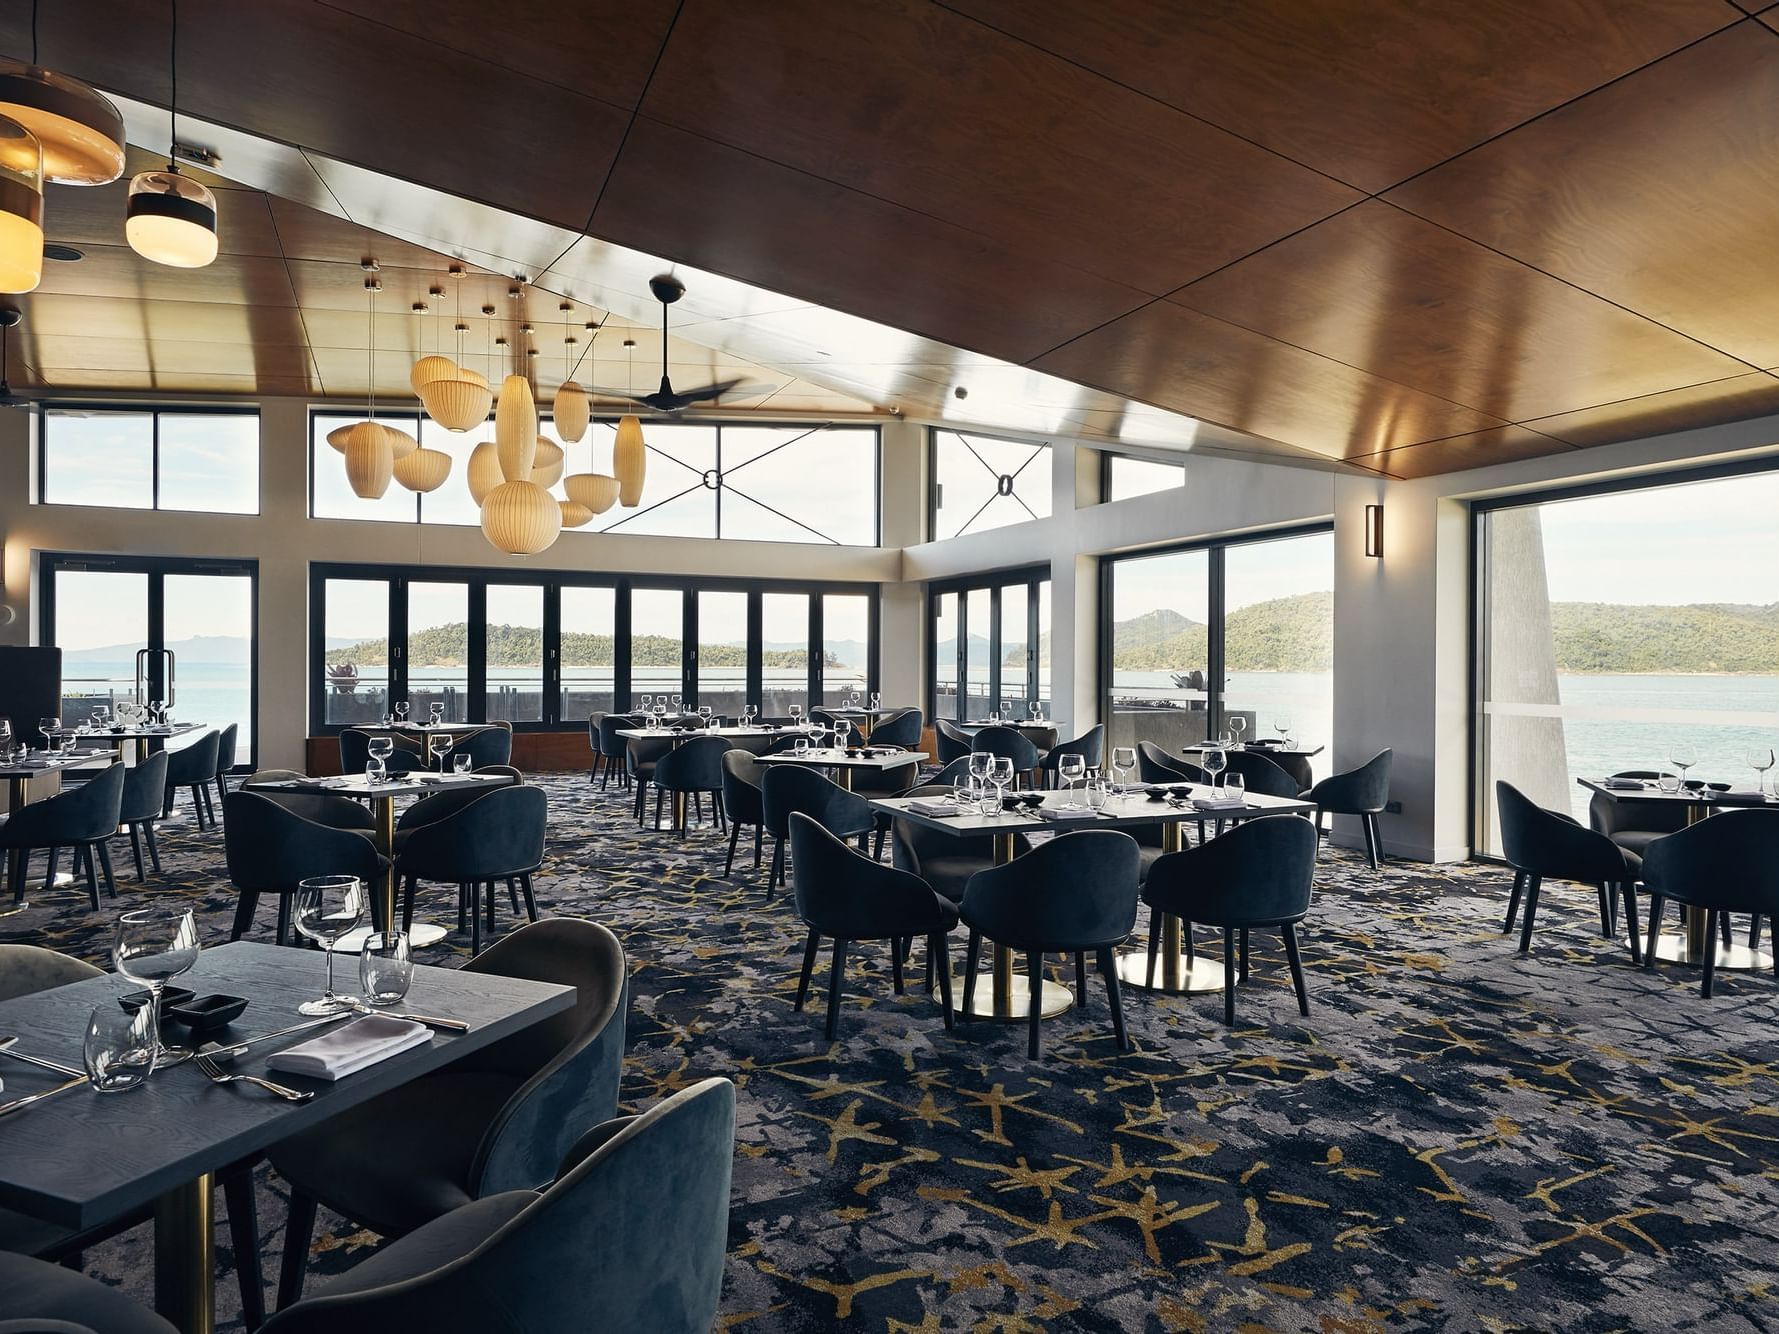 Interior of Infinity Restaurant at Daydream Island Resort